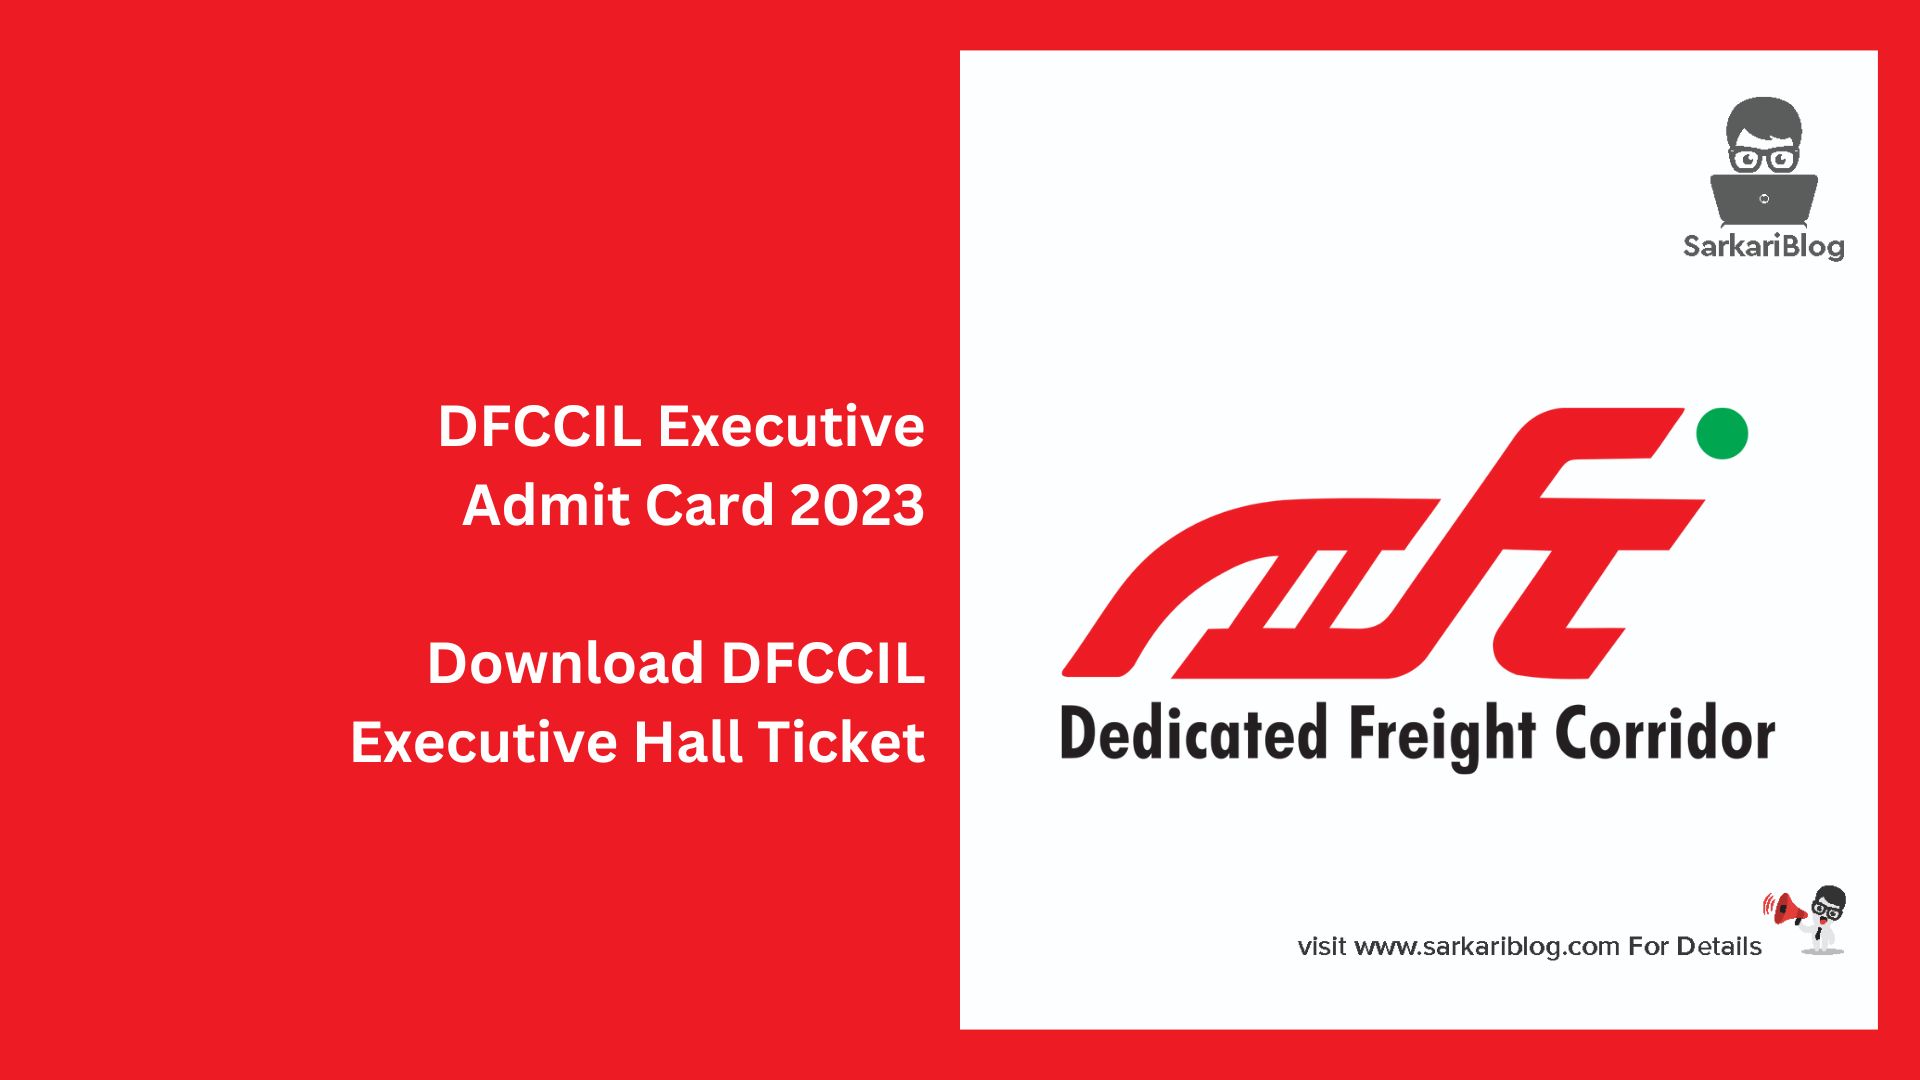 DFCCIL Executive Admit Card 2023